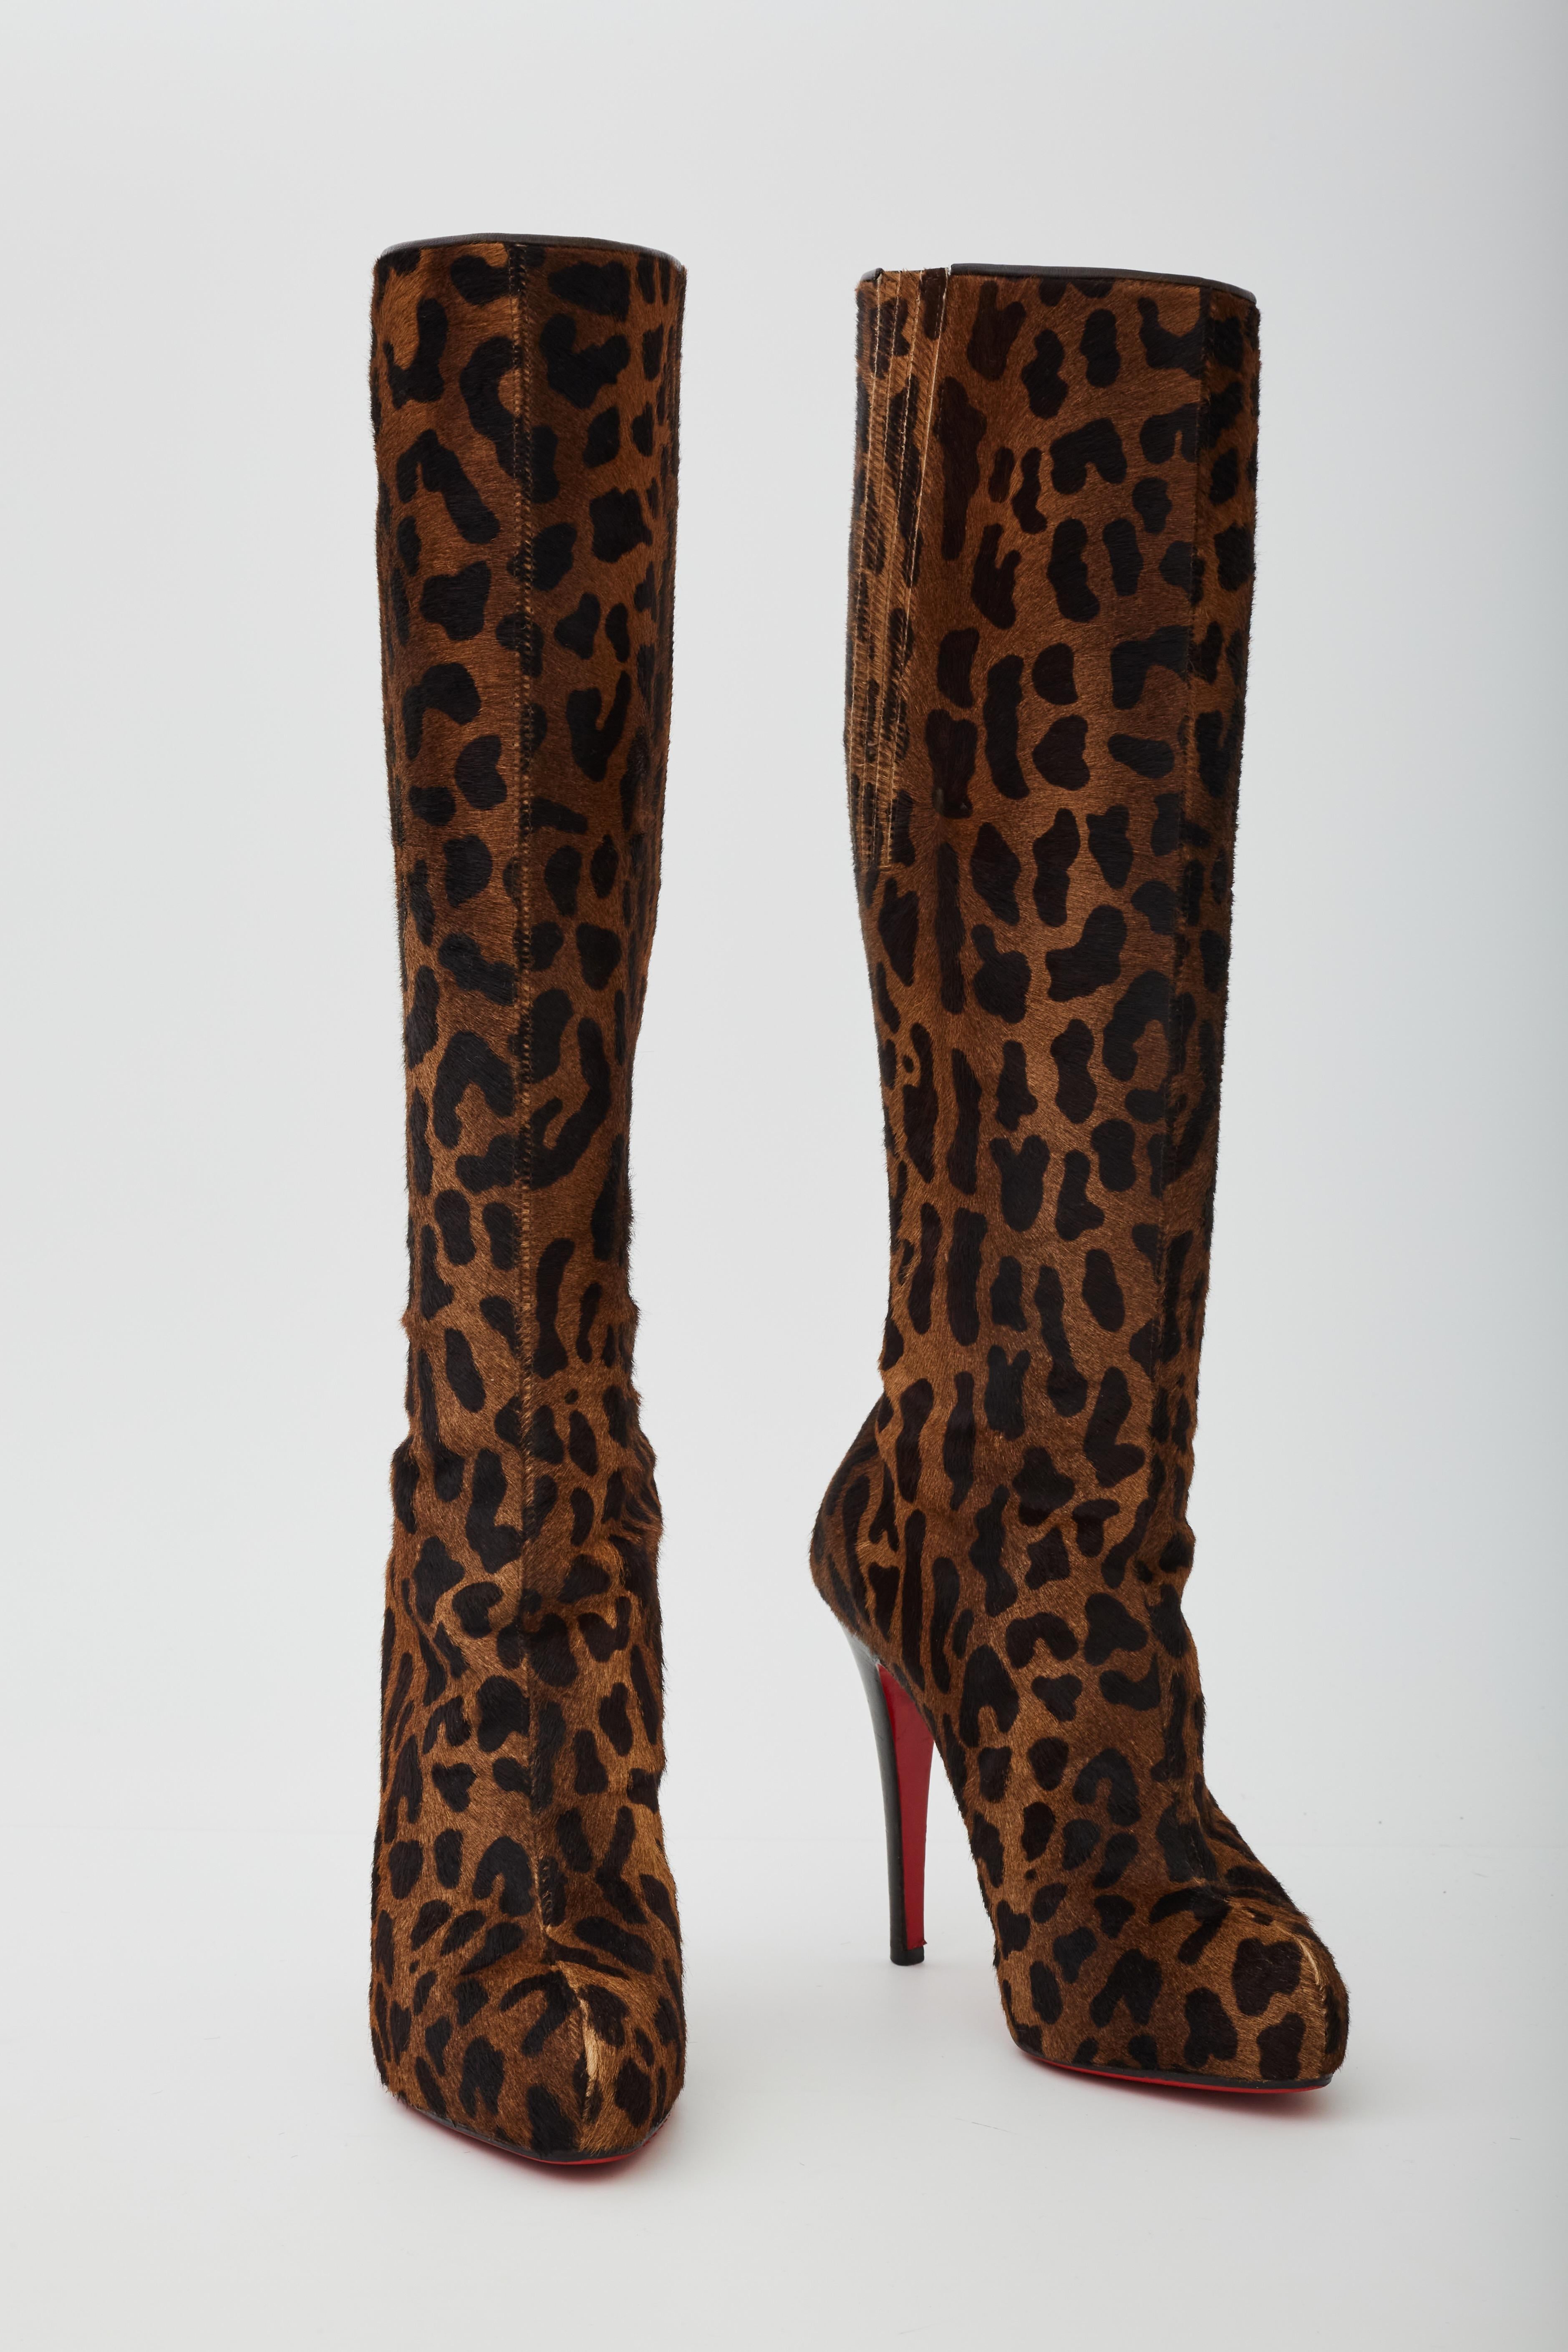 christian louboutin leopard boots